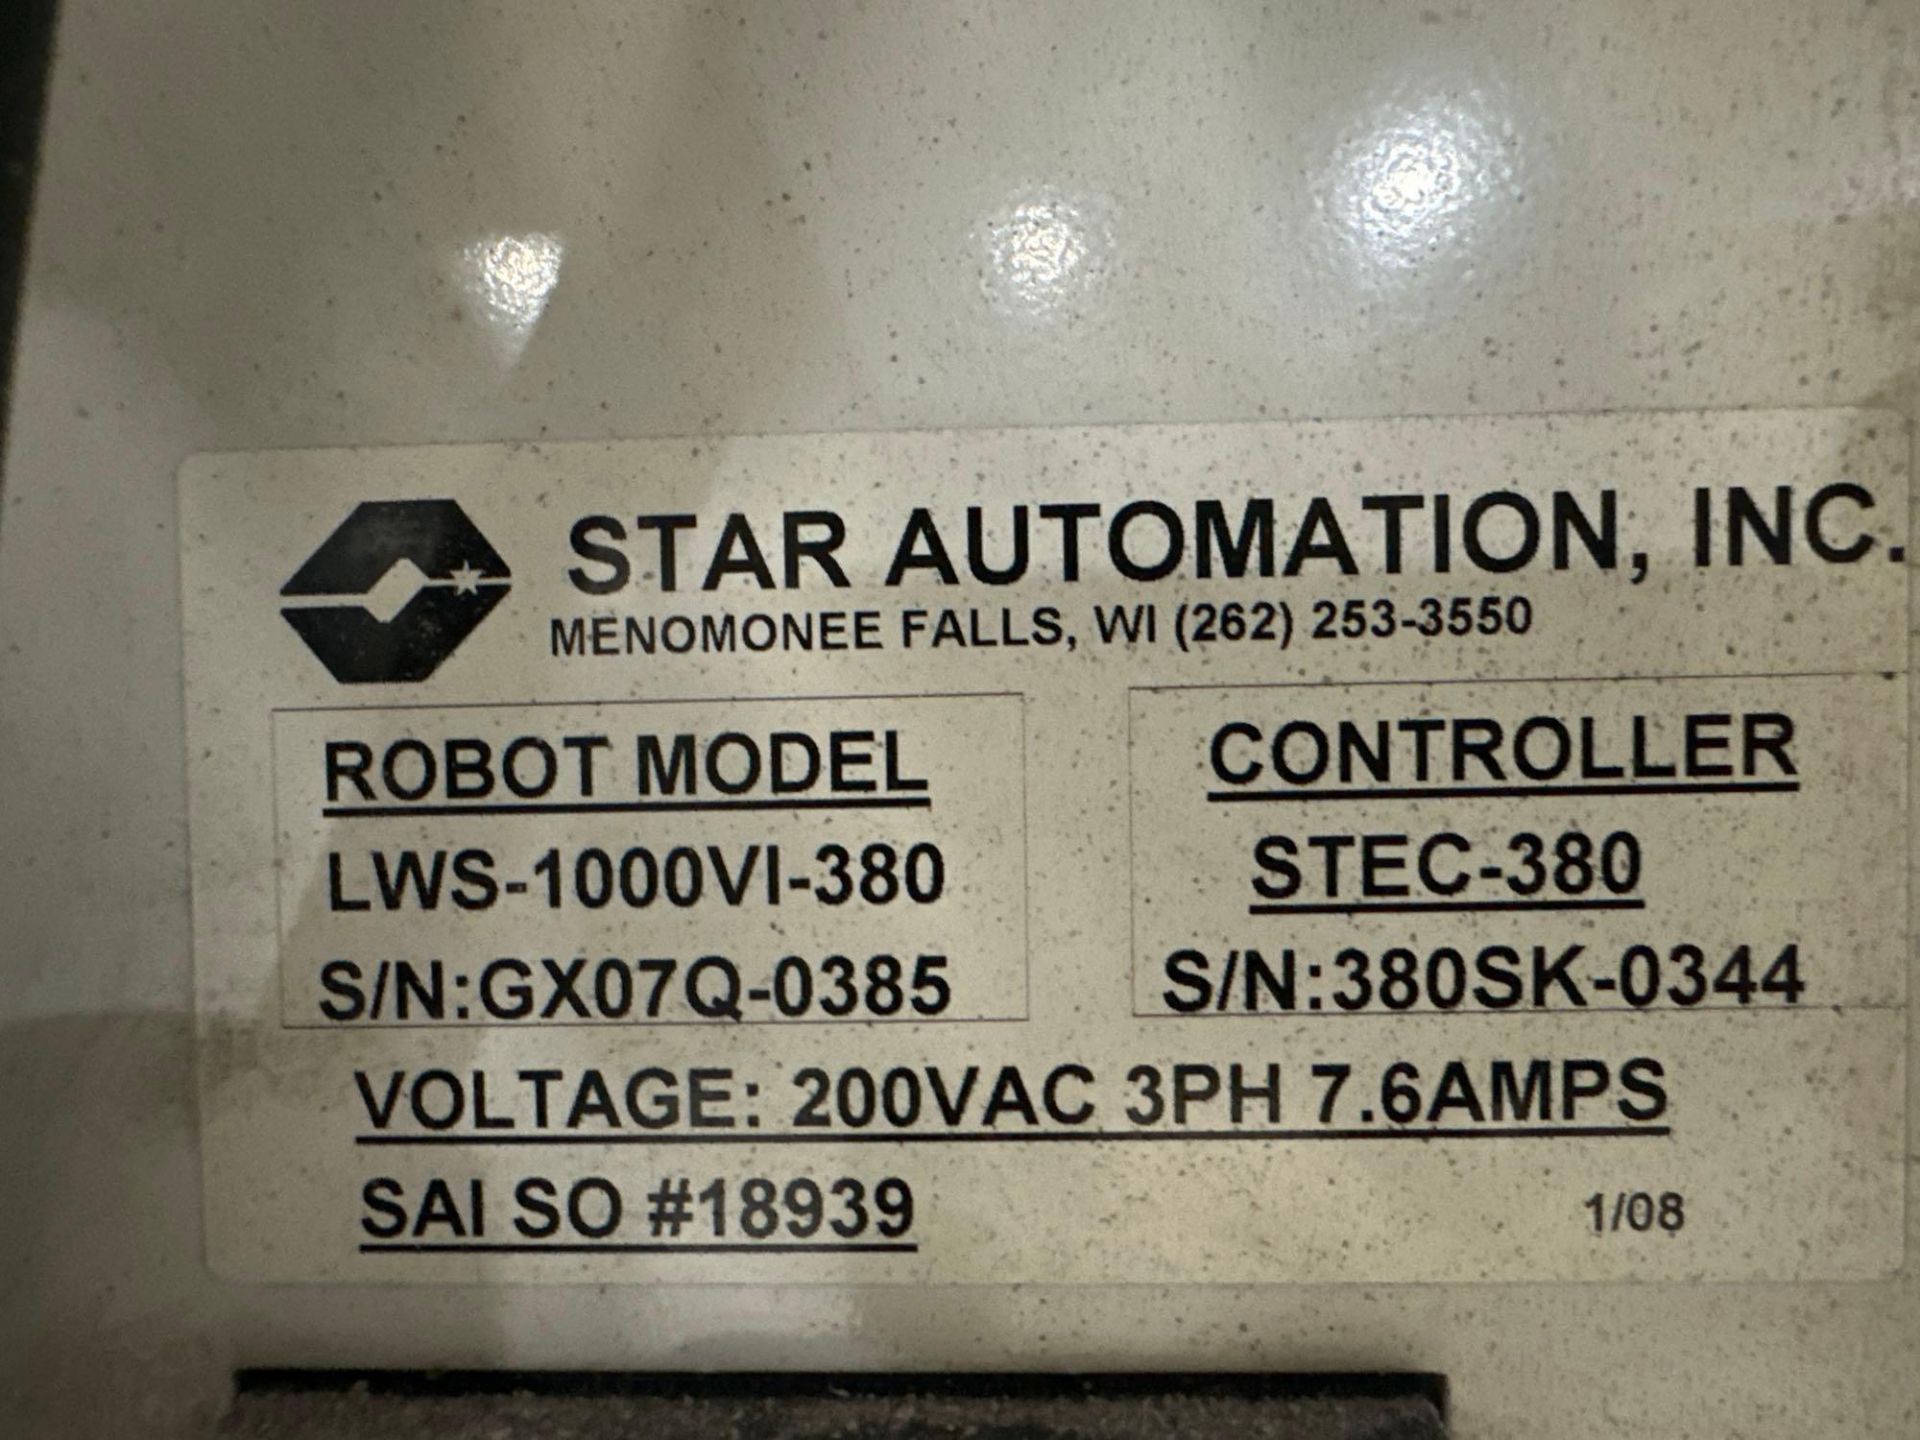 Star Automation Used LWS-1000VI-380 Servo Robot, Dual Arm - Image 7 of 7